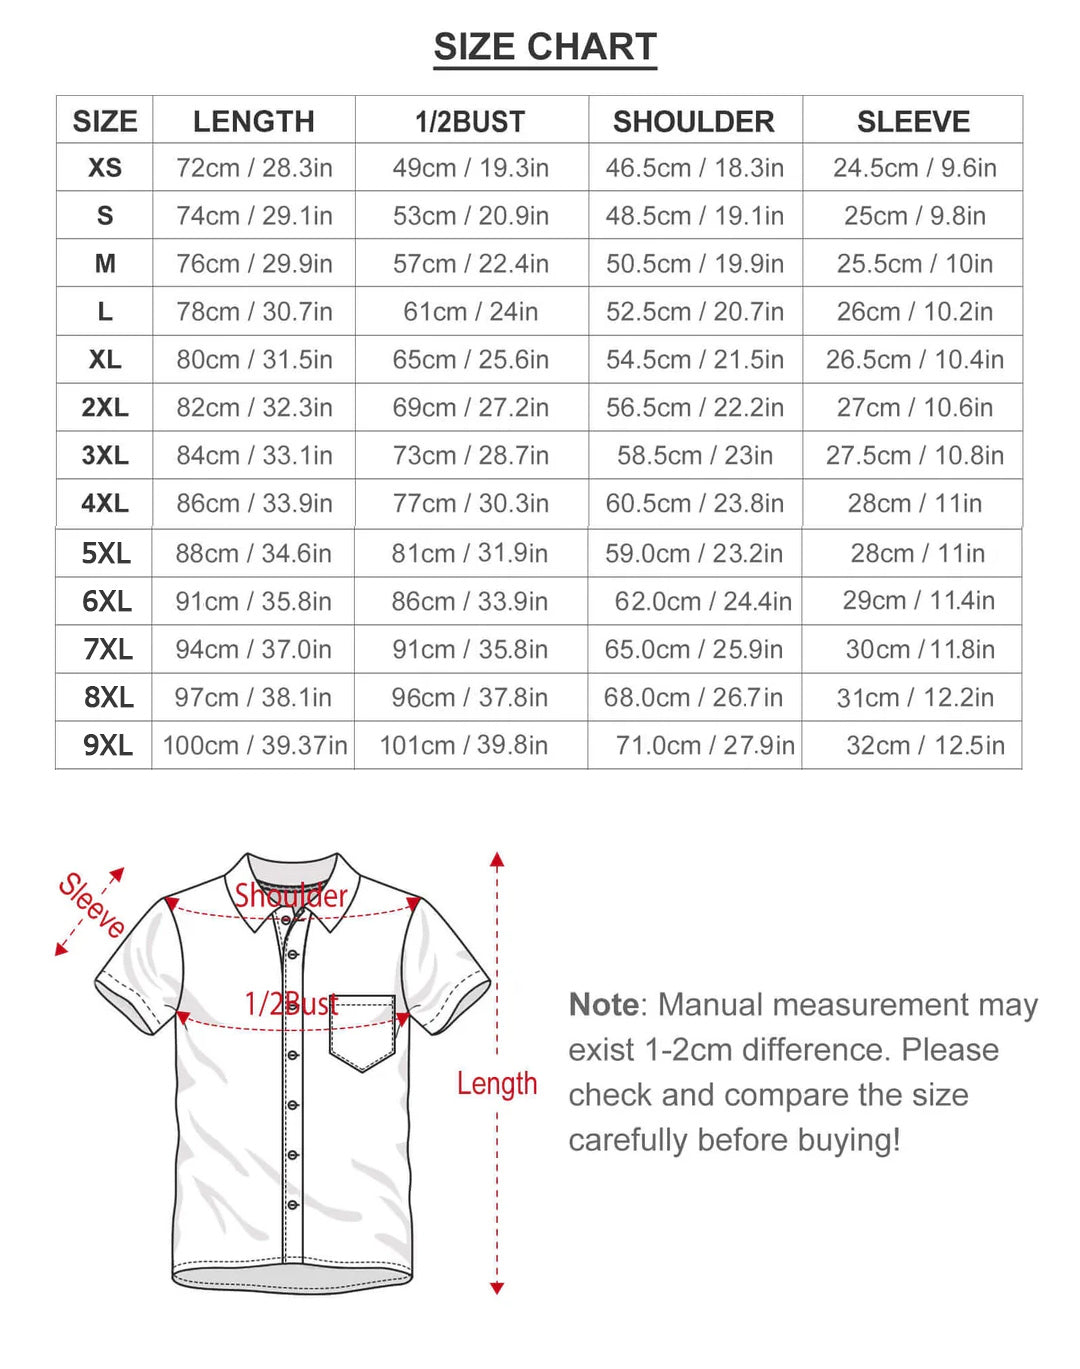 Men's 3D Sailboat & Lightning Graphic Print Shirt 2406003071